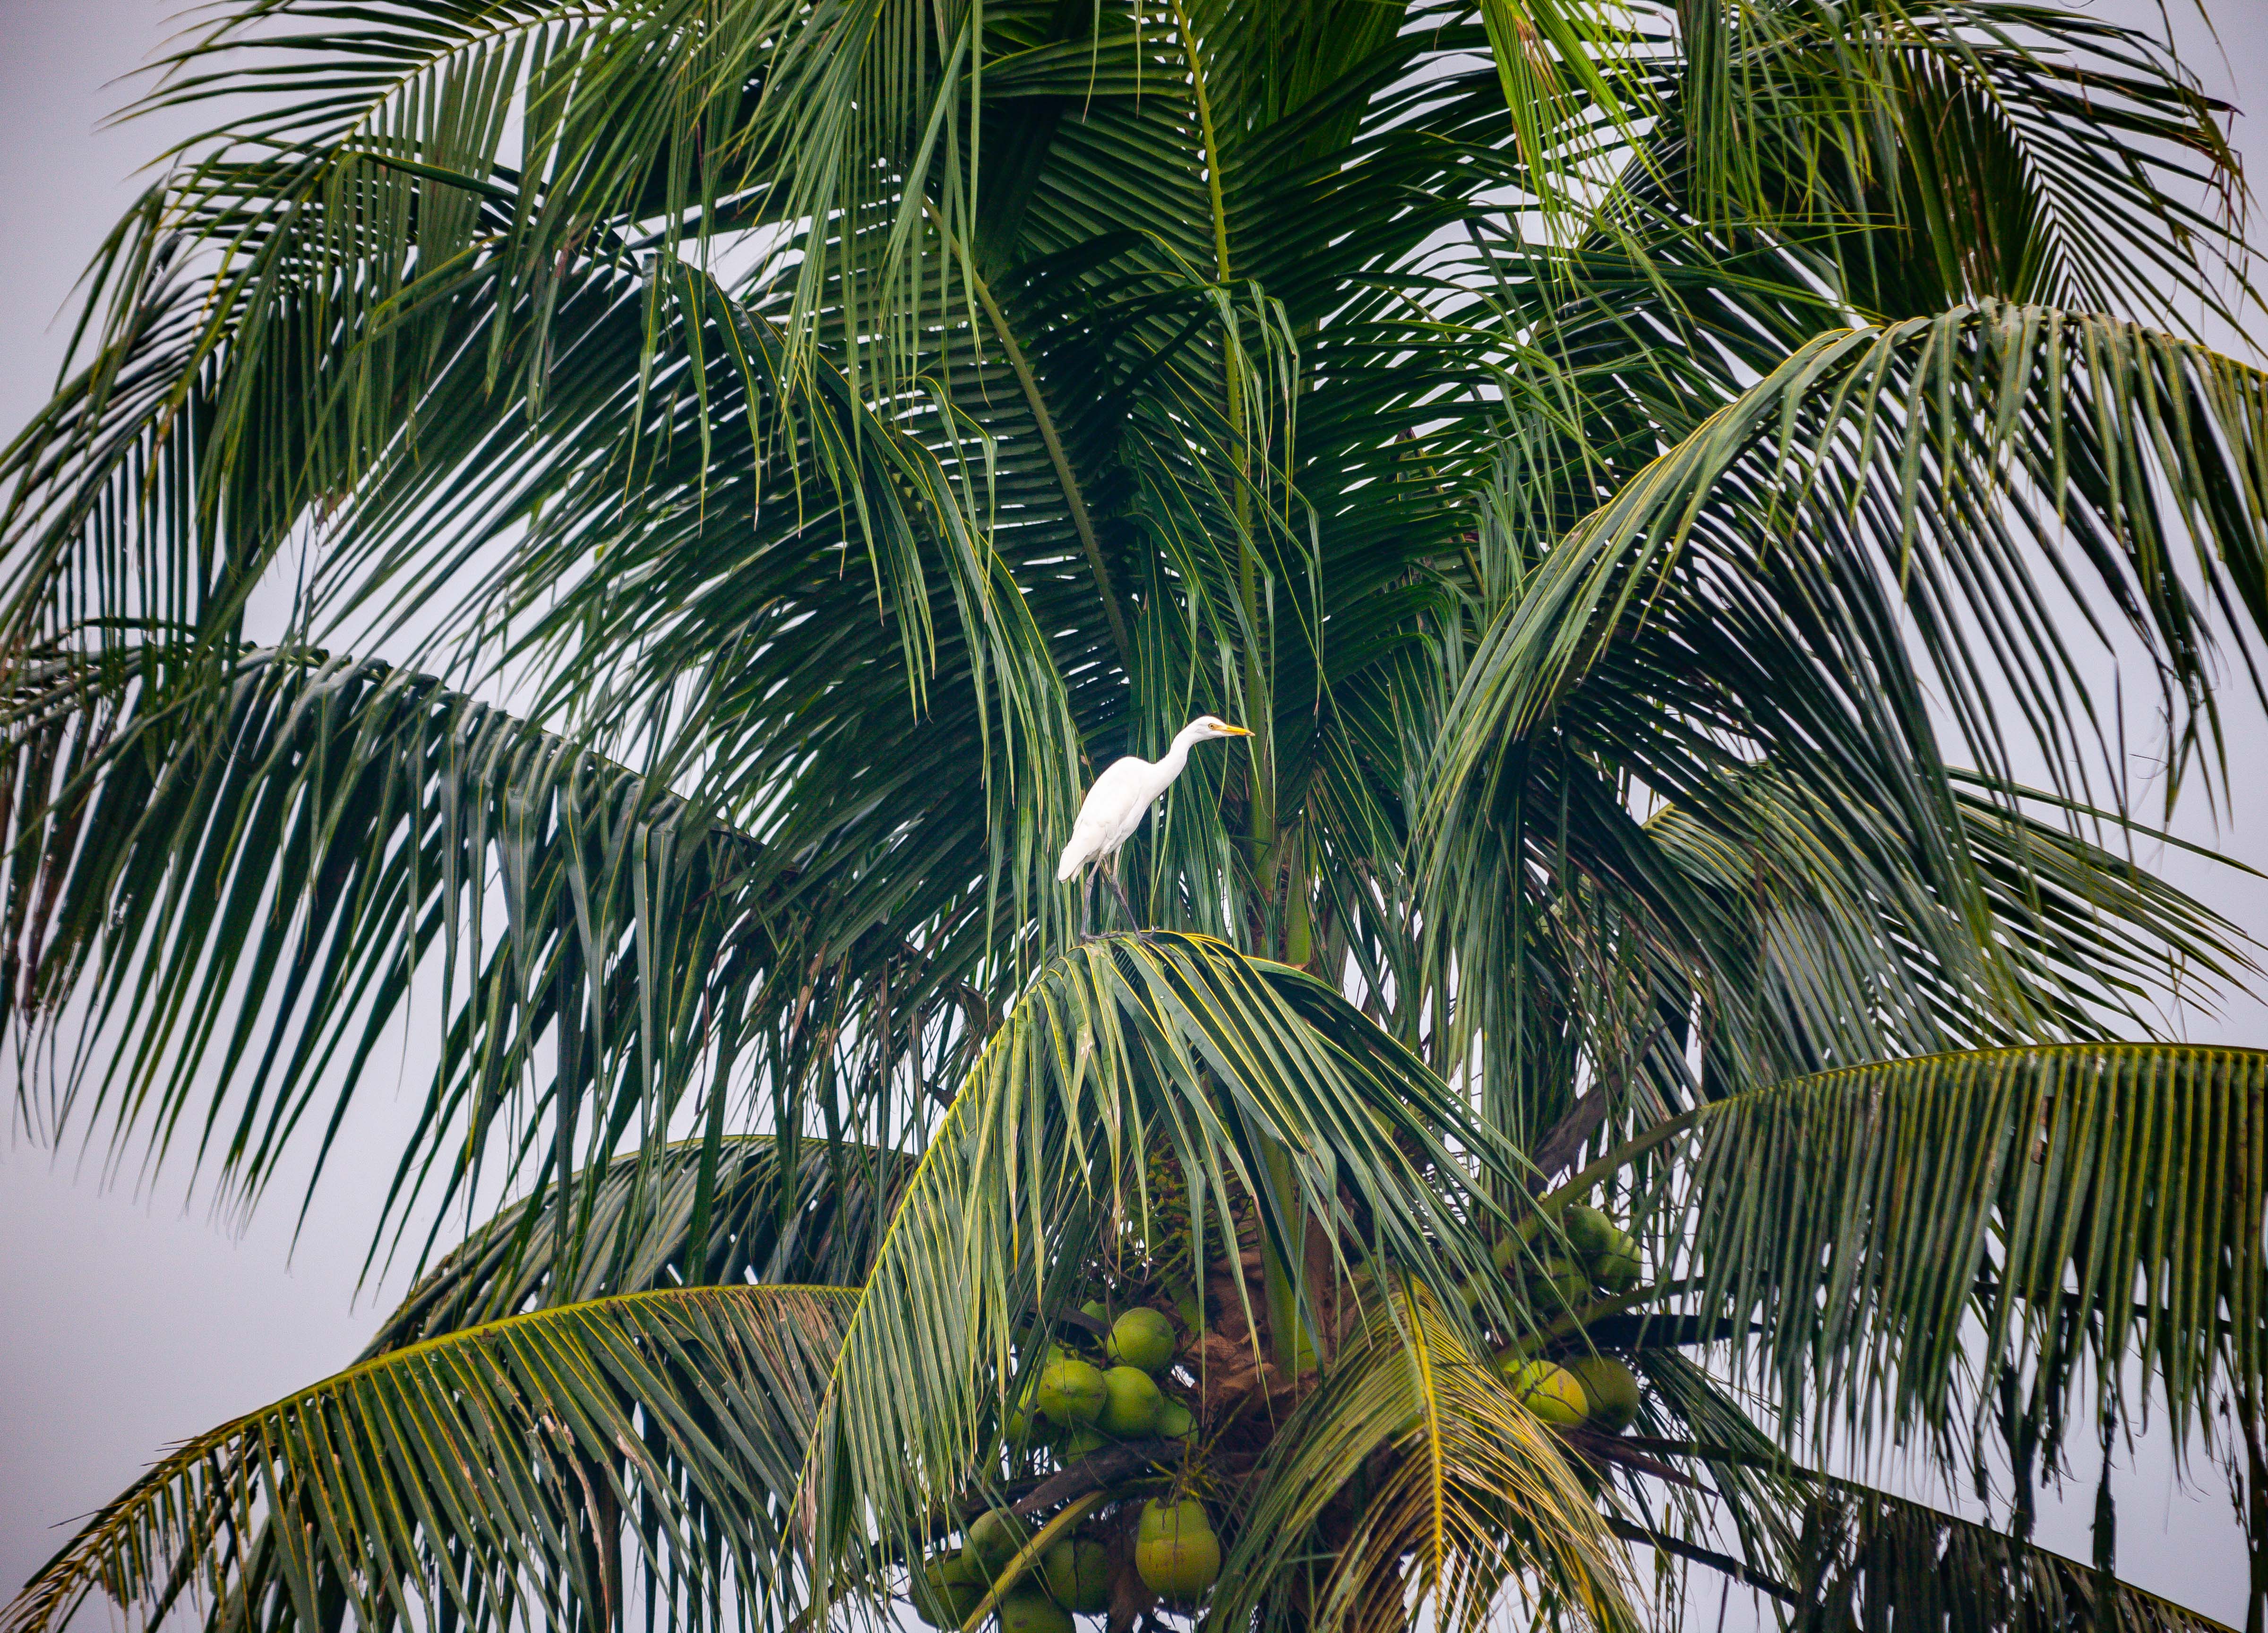 Thailand, Phatthalung Prov, Egret In Palm, 2008, IMG 1535